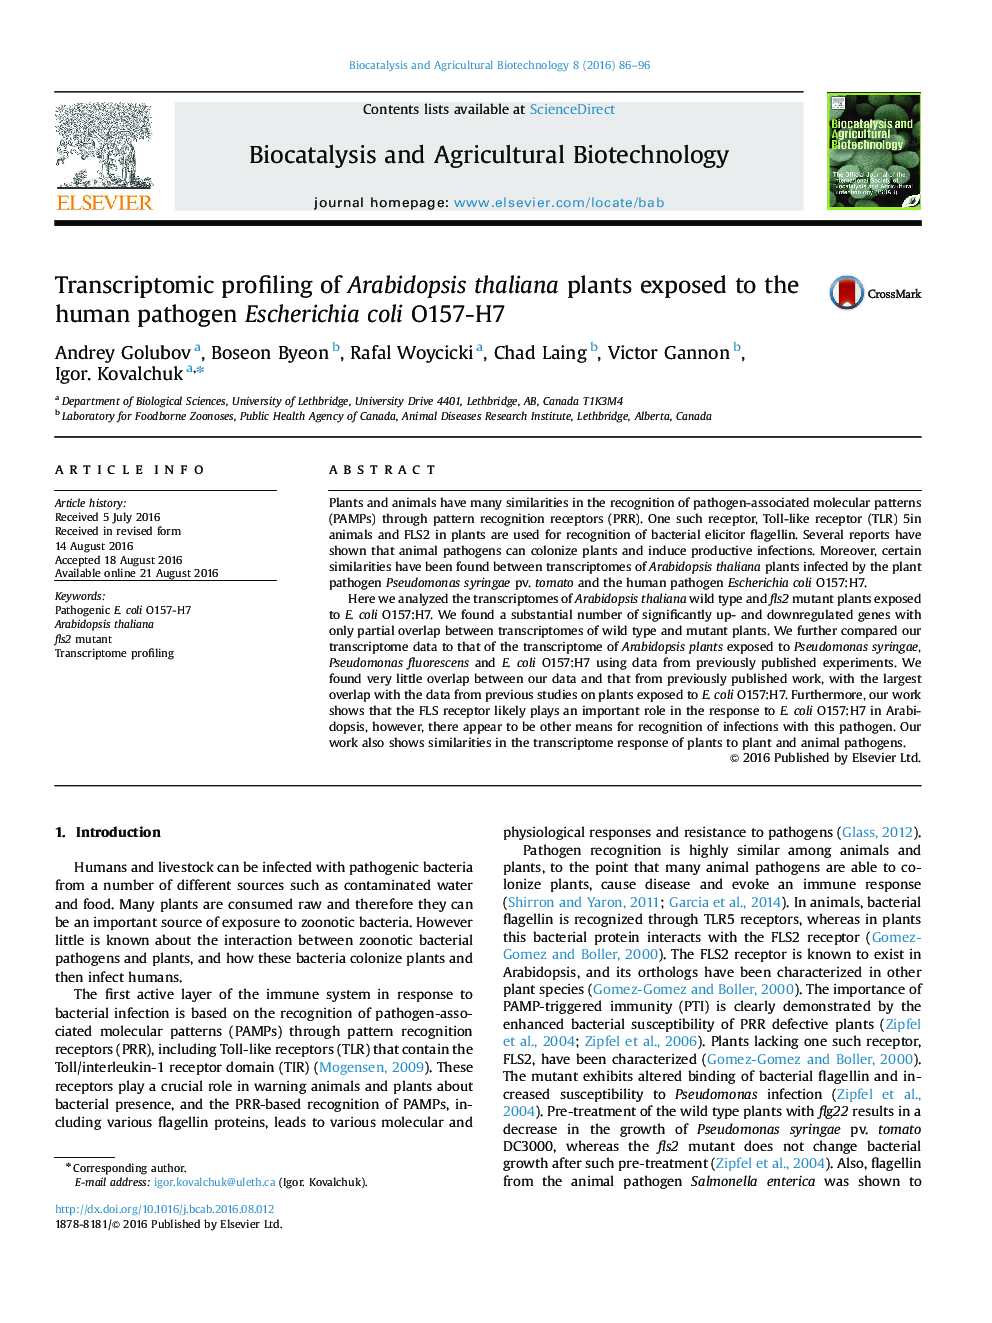 Transcriptomic profiling of Arabidopsis thaliana plants exposed to the human pathogen Escherichia coli O157-H7